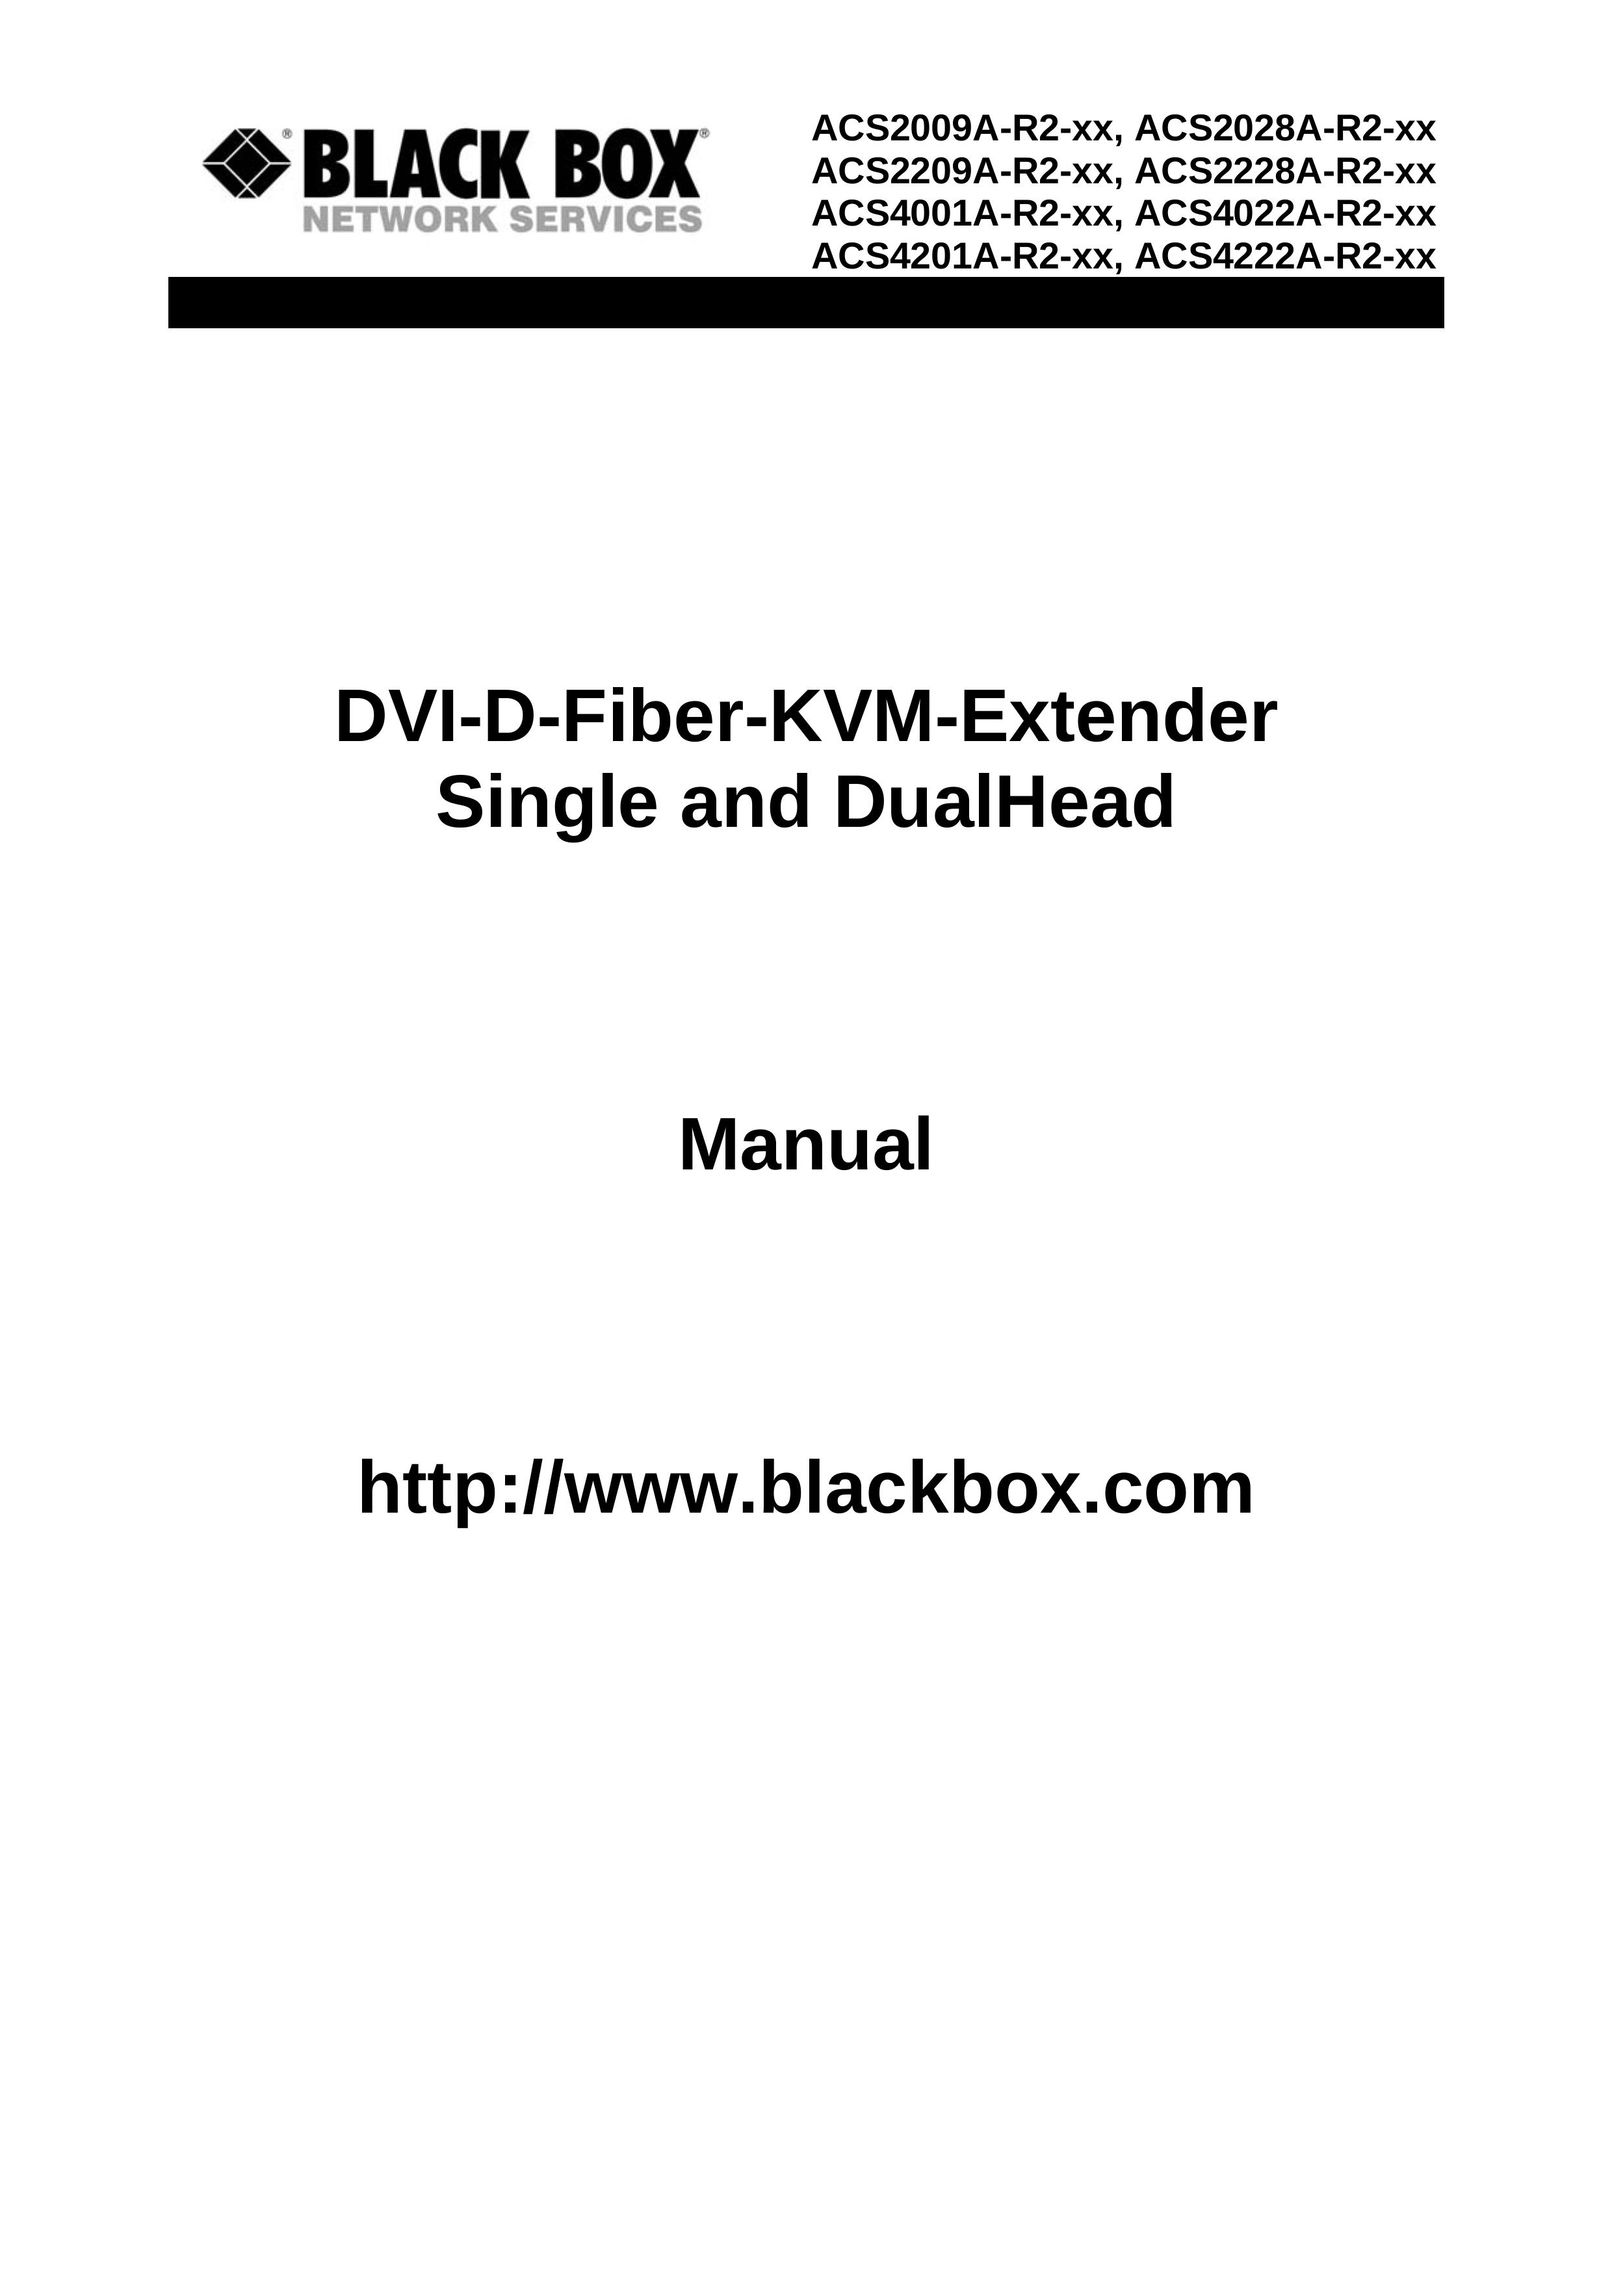 Black Box ACS2028A-R2-xx ACS2209A-R2-xx Network Hardware User Manual